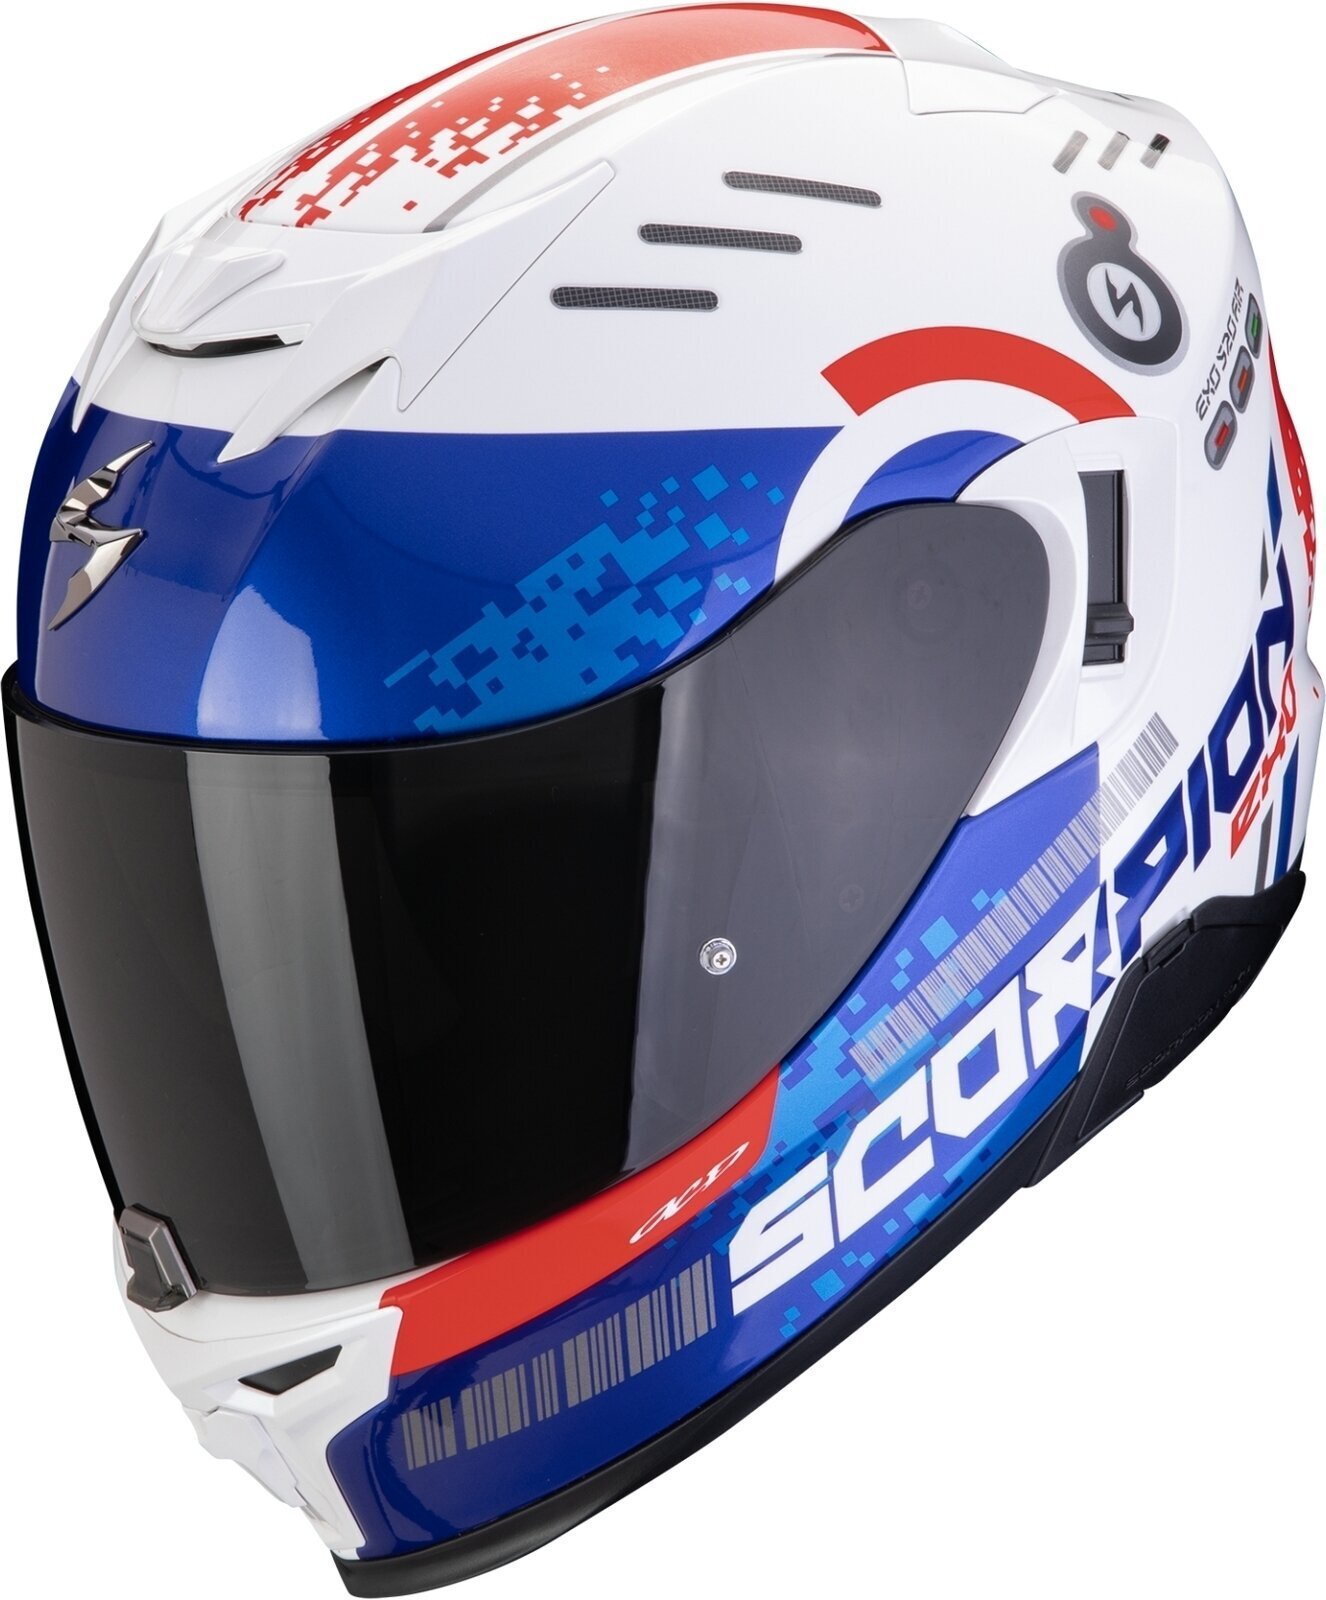 Helm Scorpion EXO 520 EVO AIR TITAN White/Blue/Red S Helm